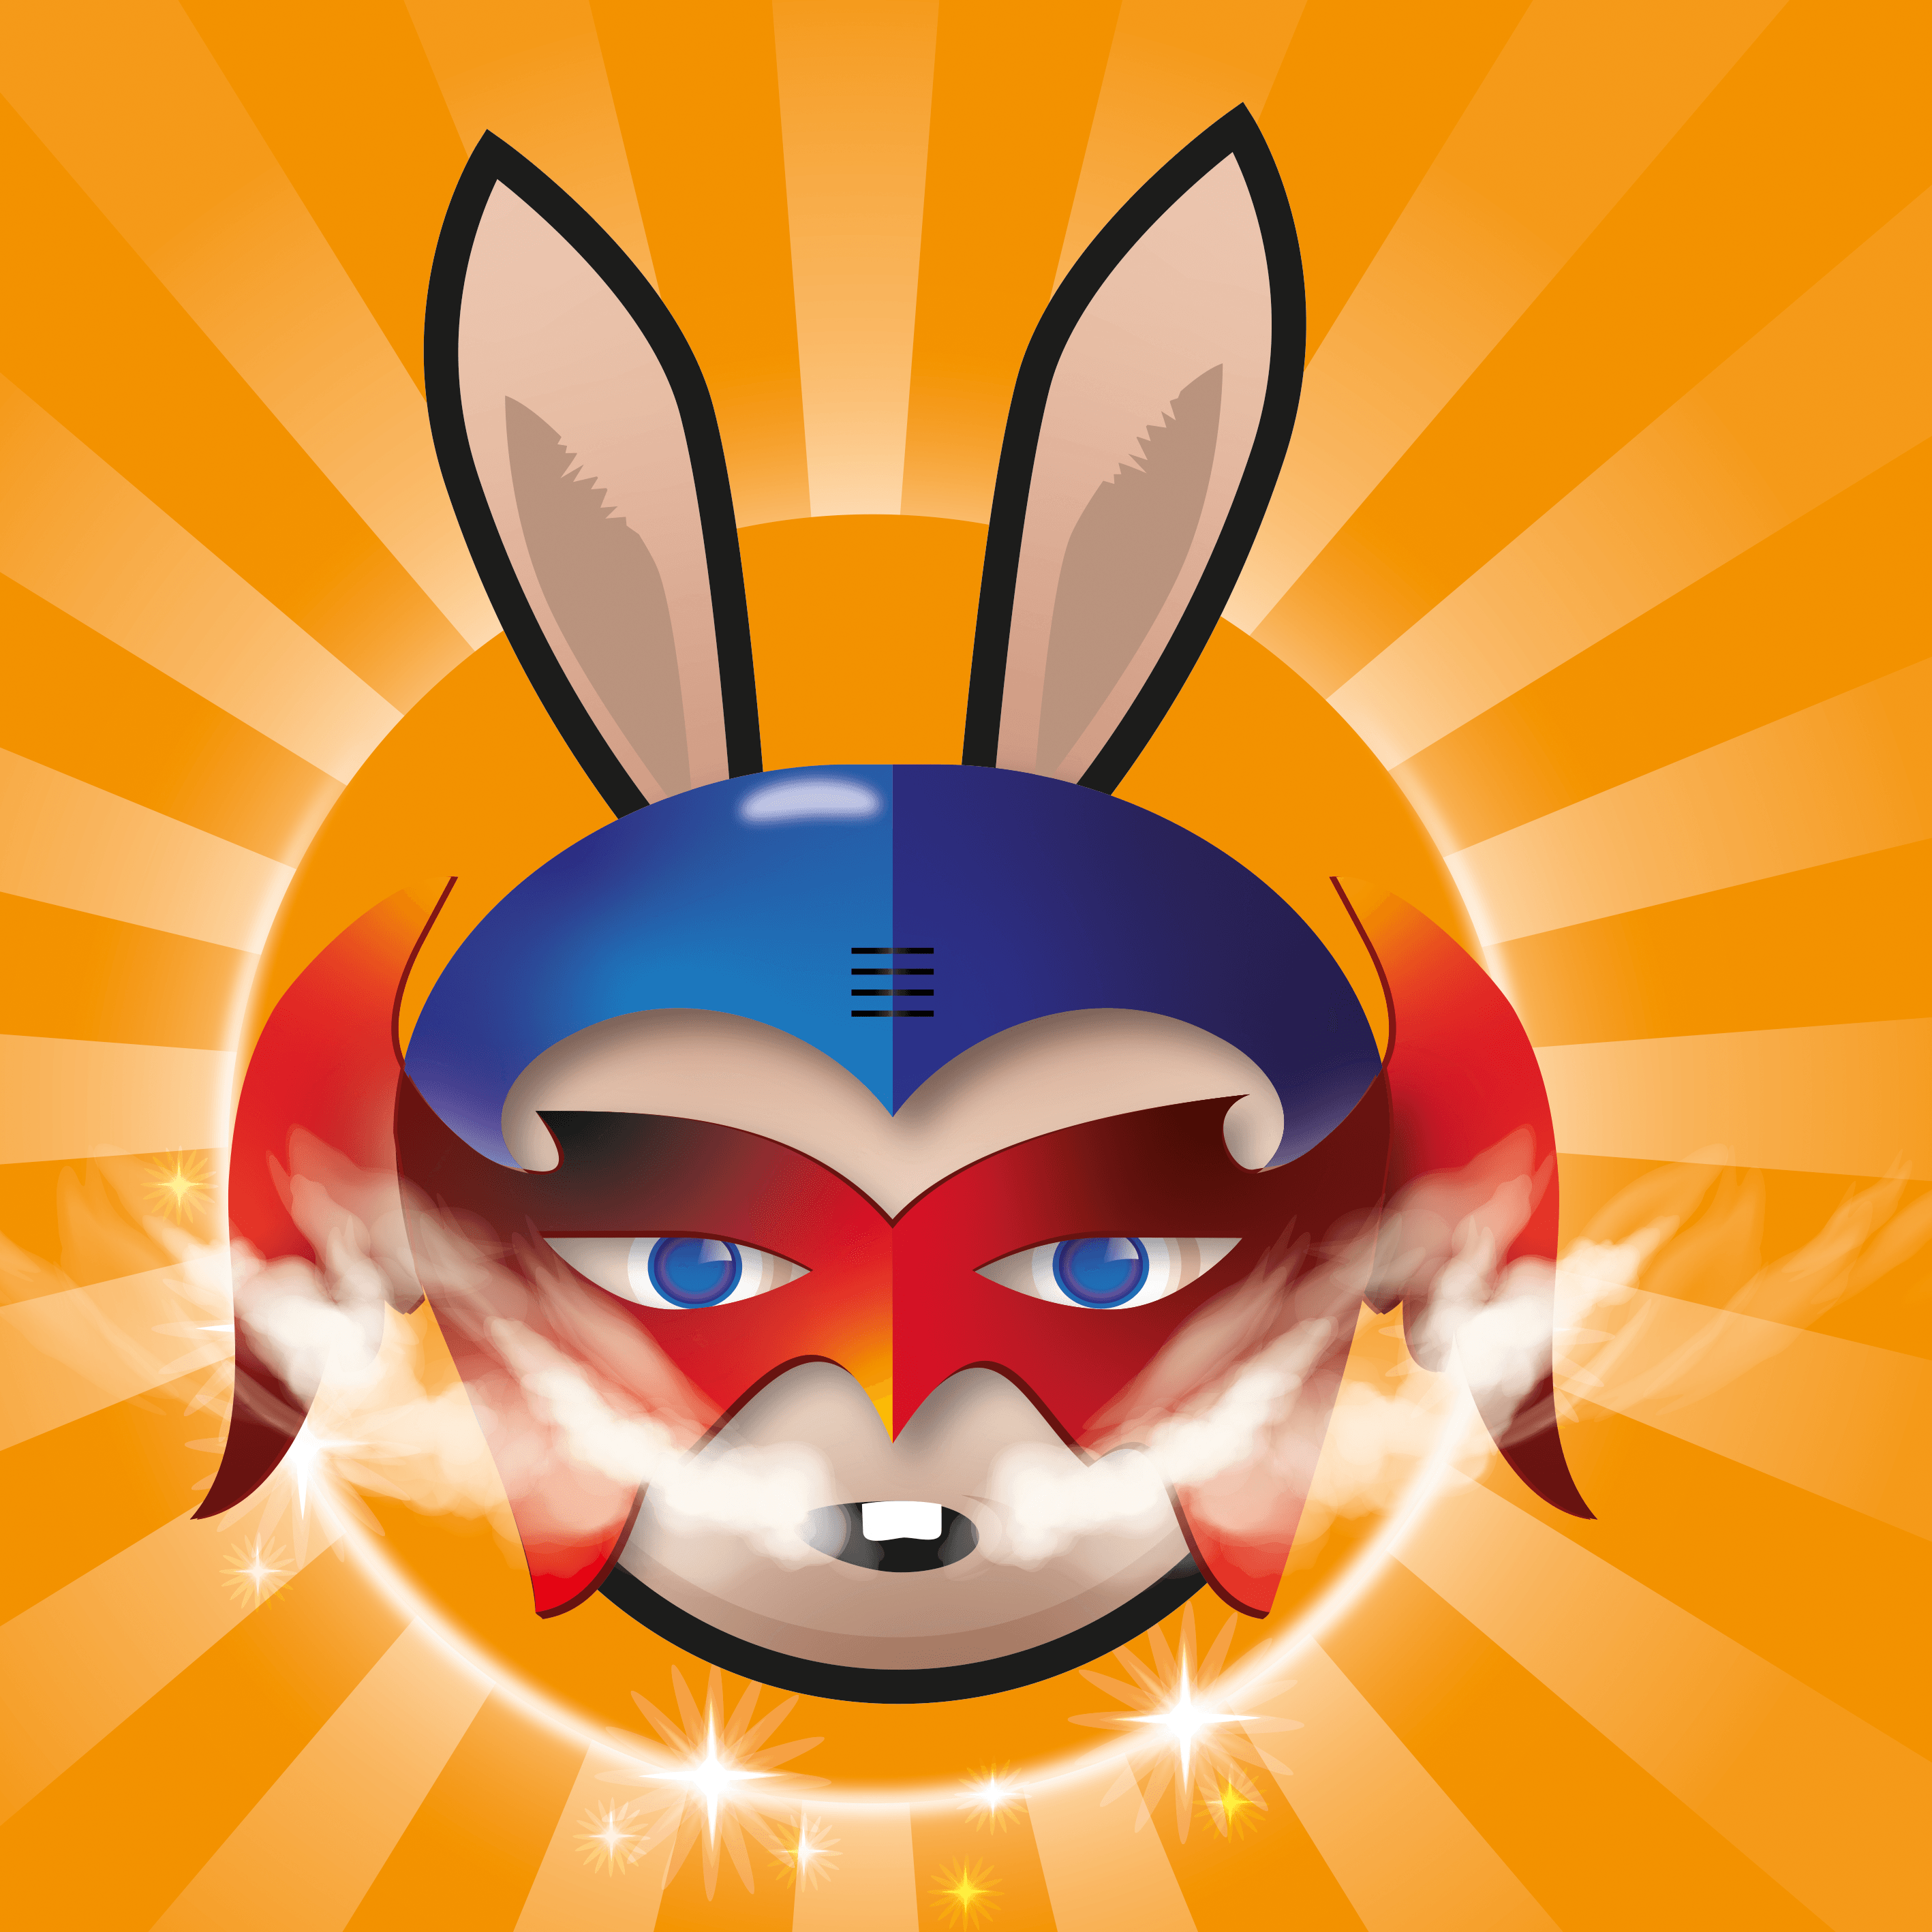 CryptoRabbit #108 - Superhero Rabbits collection